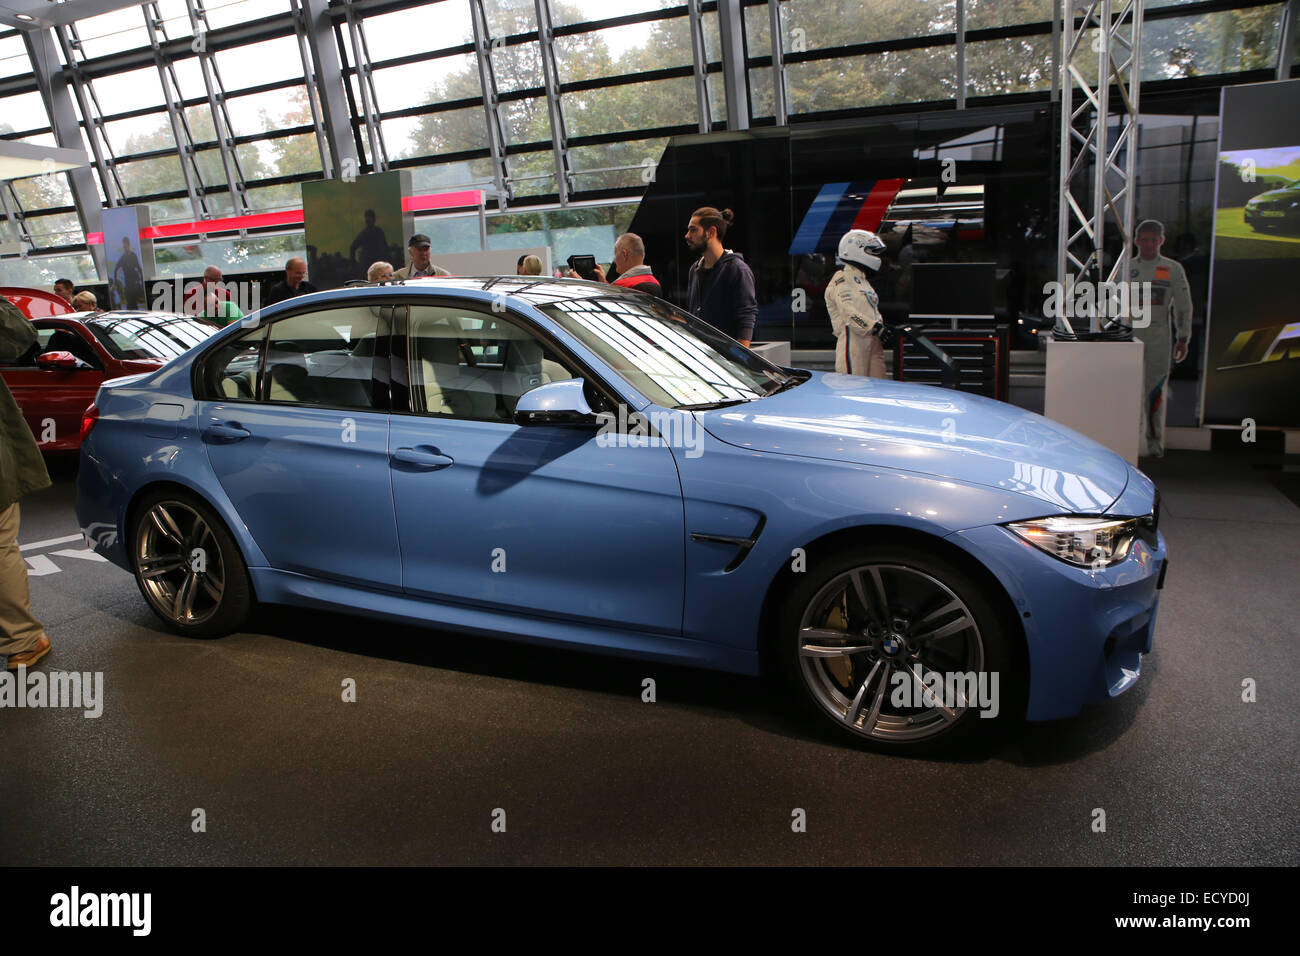 Baby Blue deportivo sedán BMW serie m Foto de stock